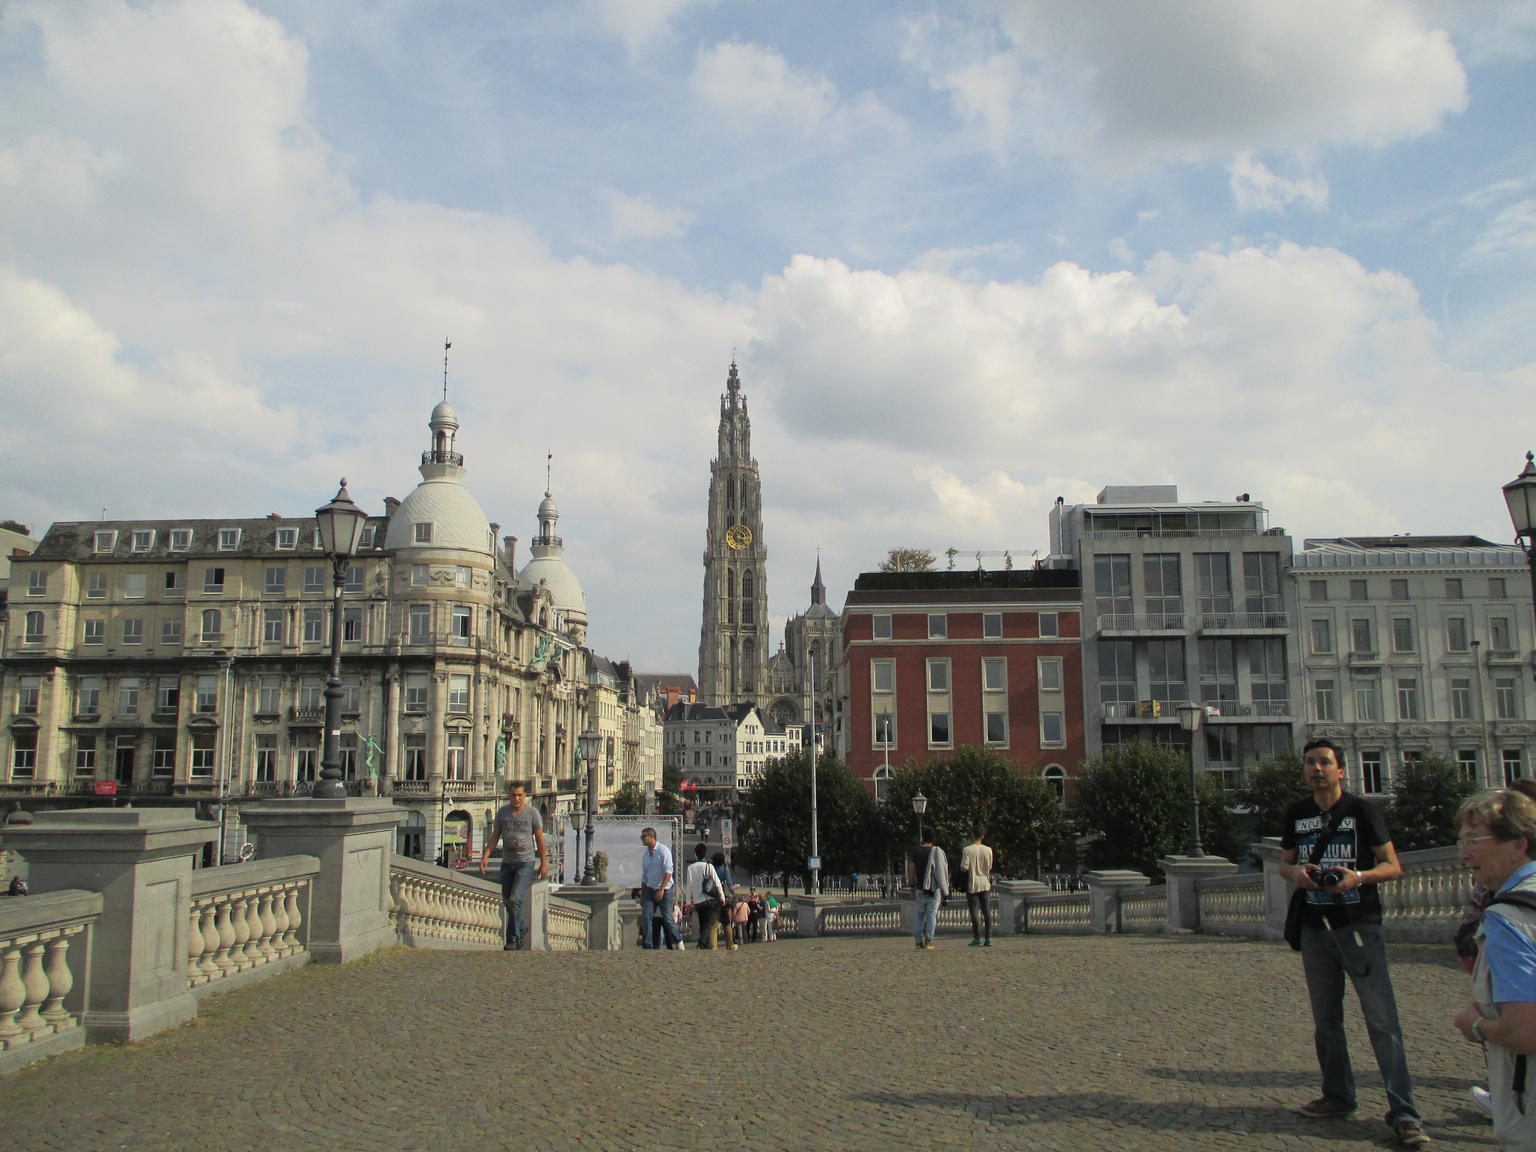 City Center, Antwerpen